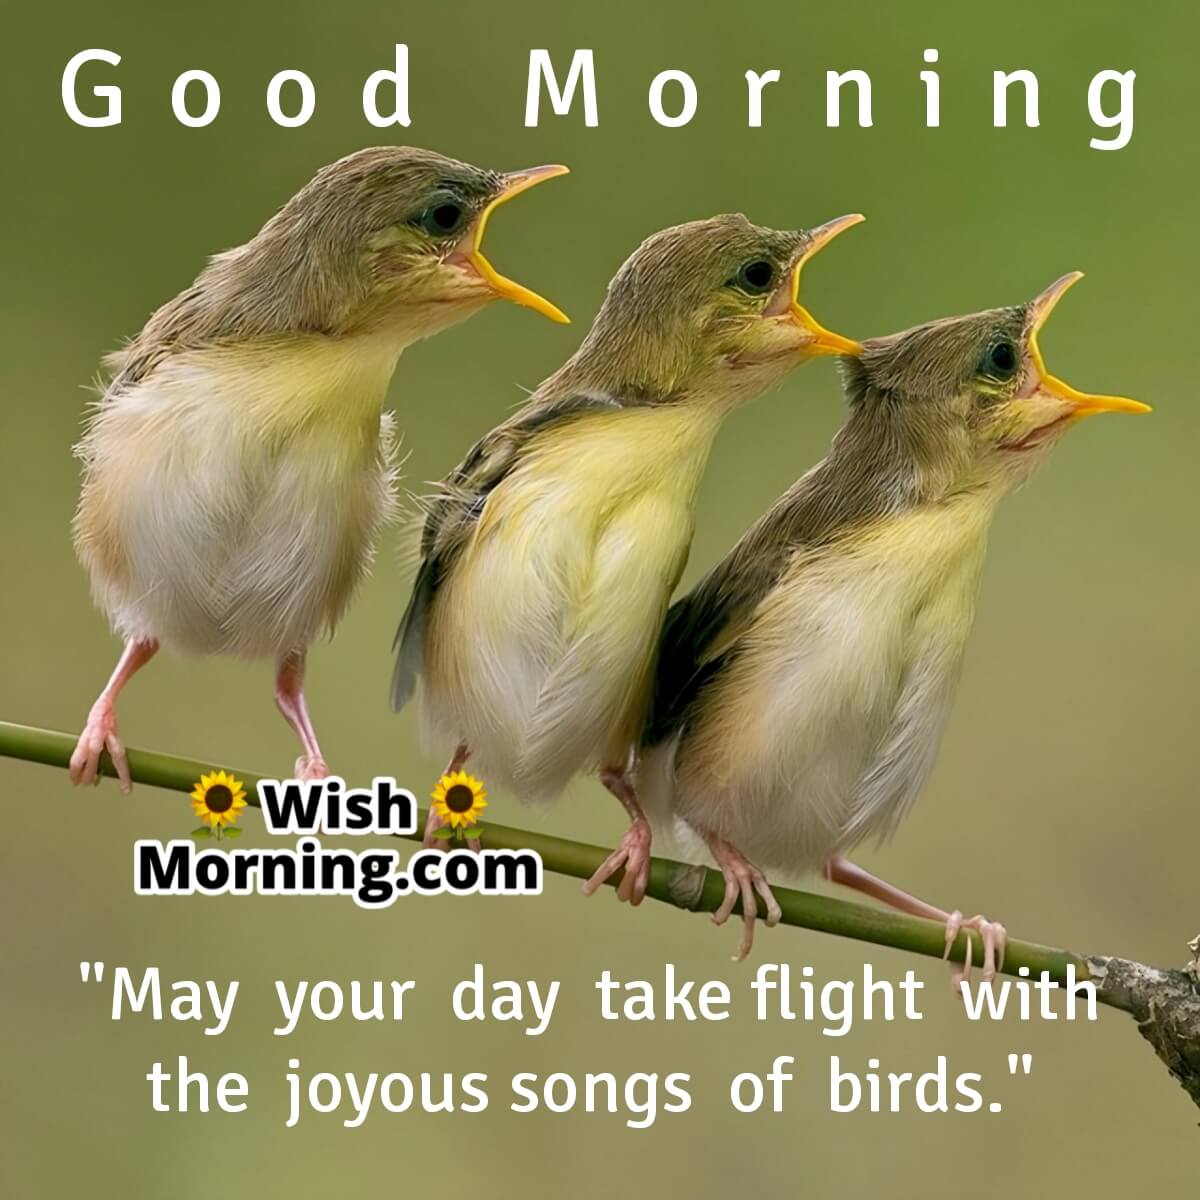 Good Morning Wish With Birds